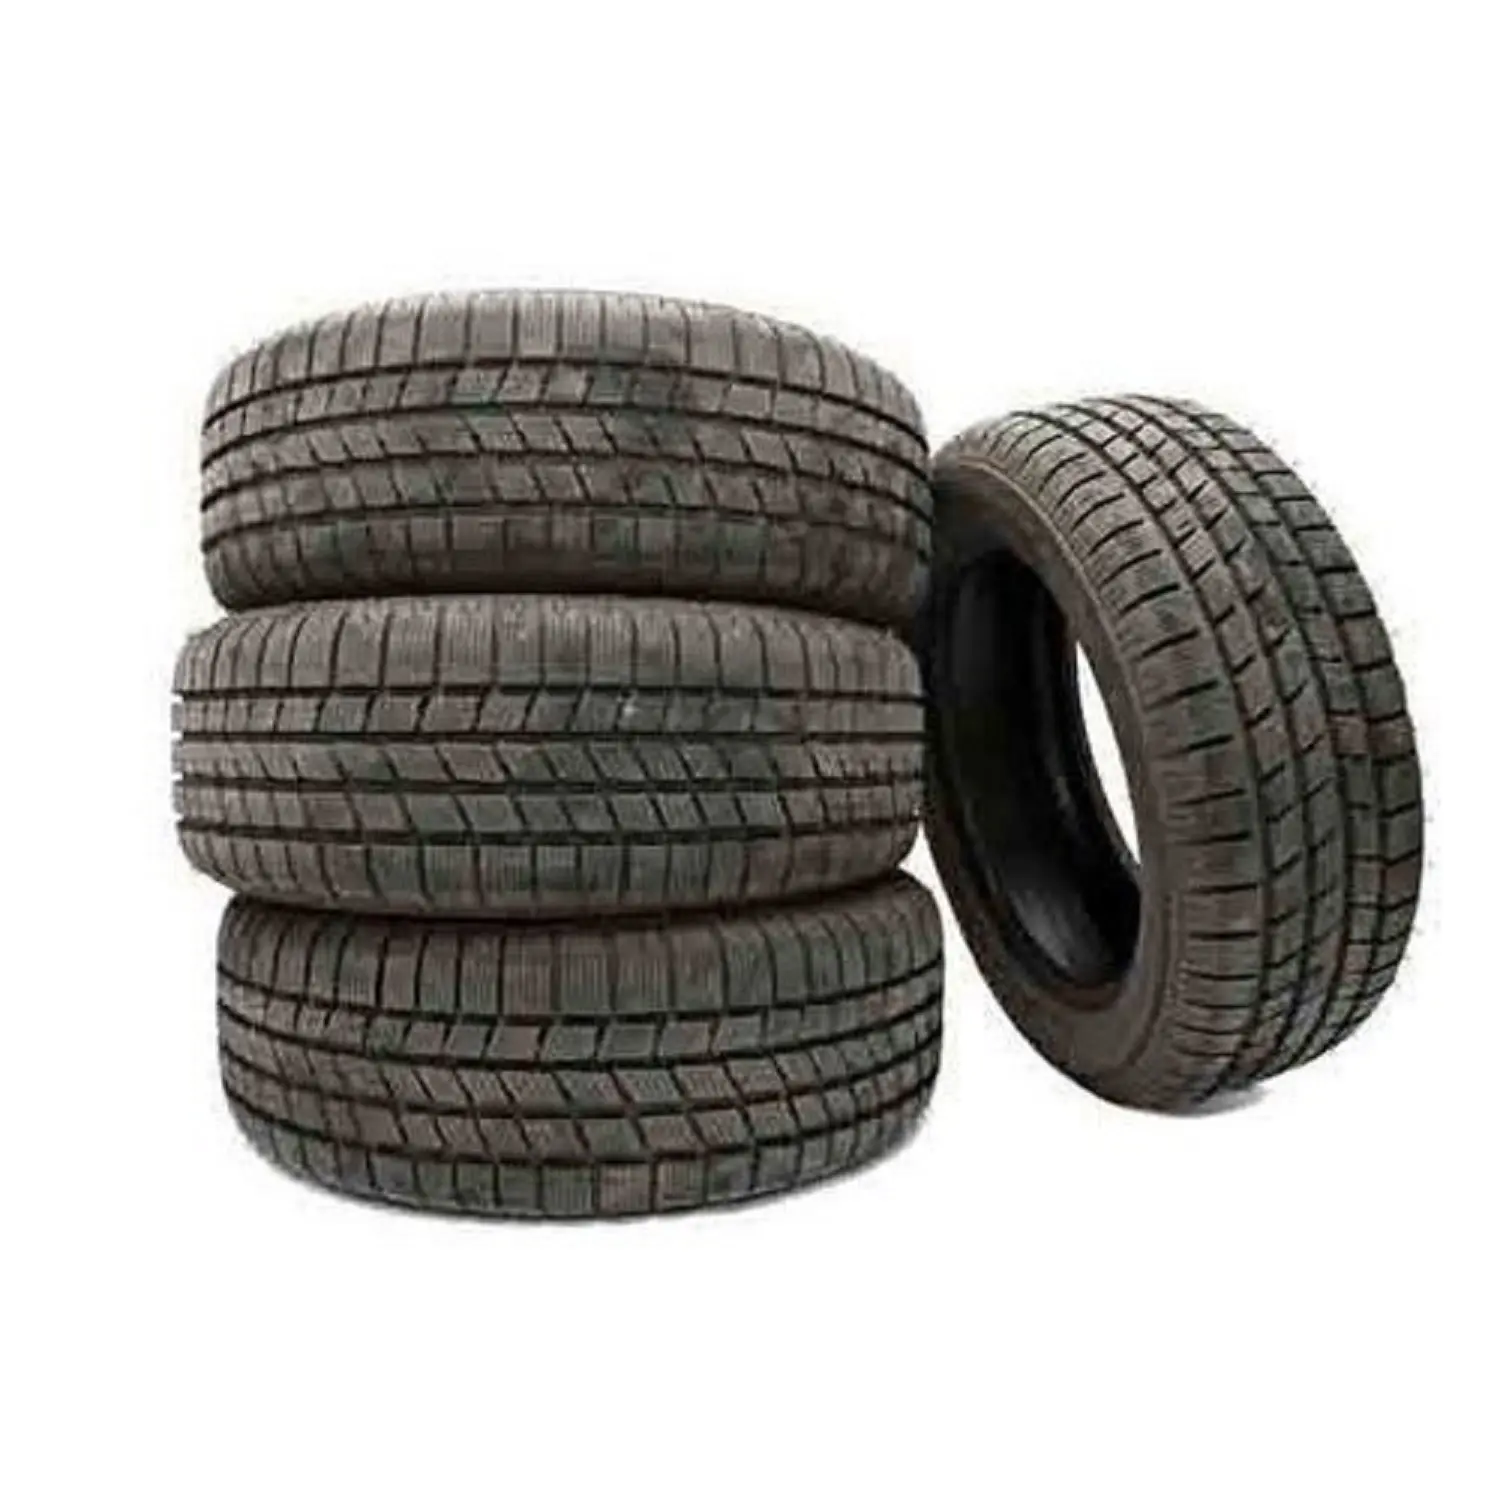 Bulk Used Truck Tires Used Semi Trailer Truck Tires Forsale/used truck tires